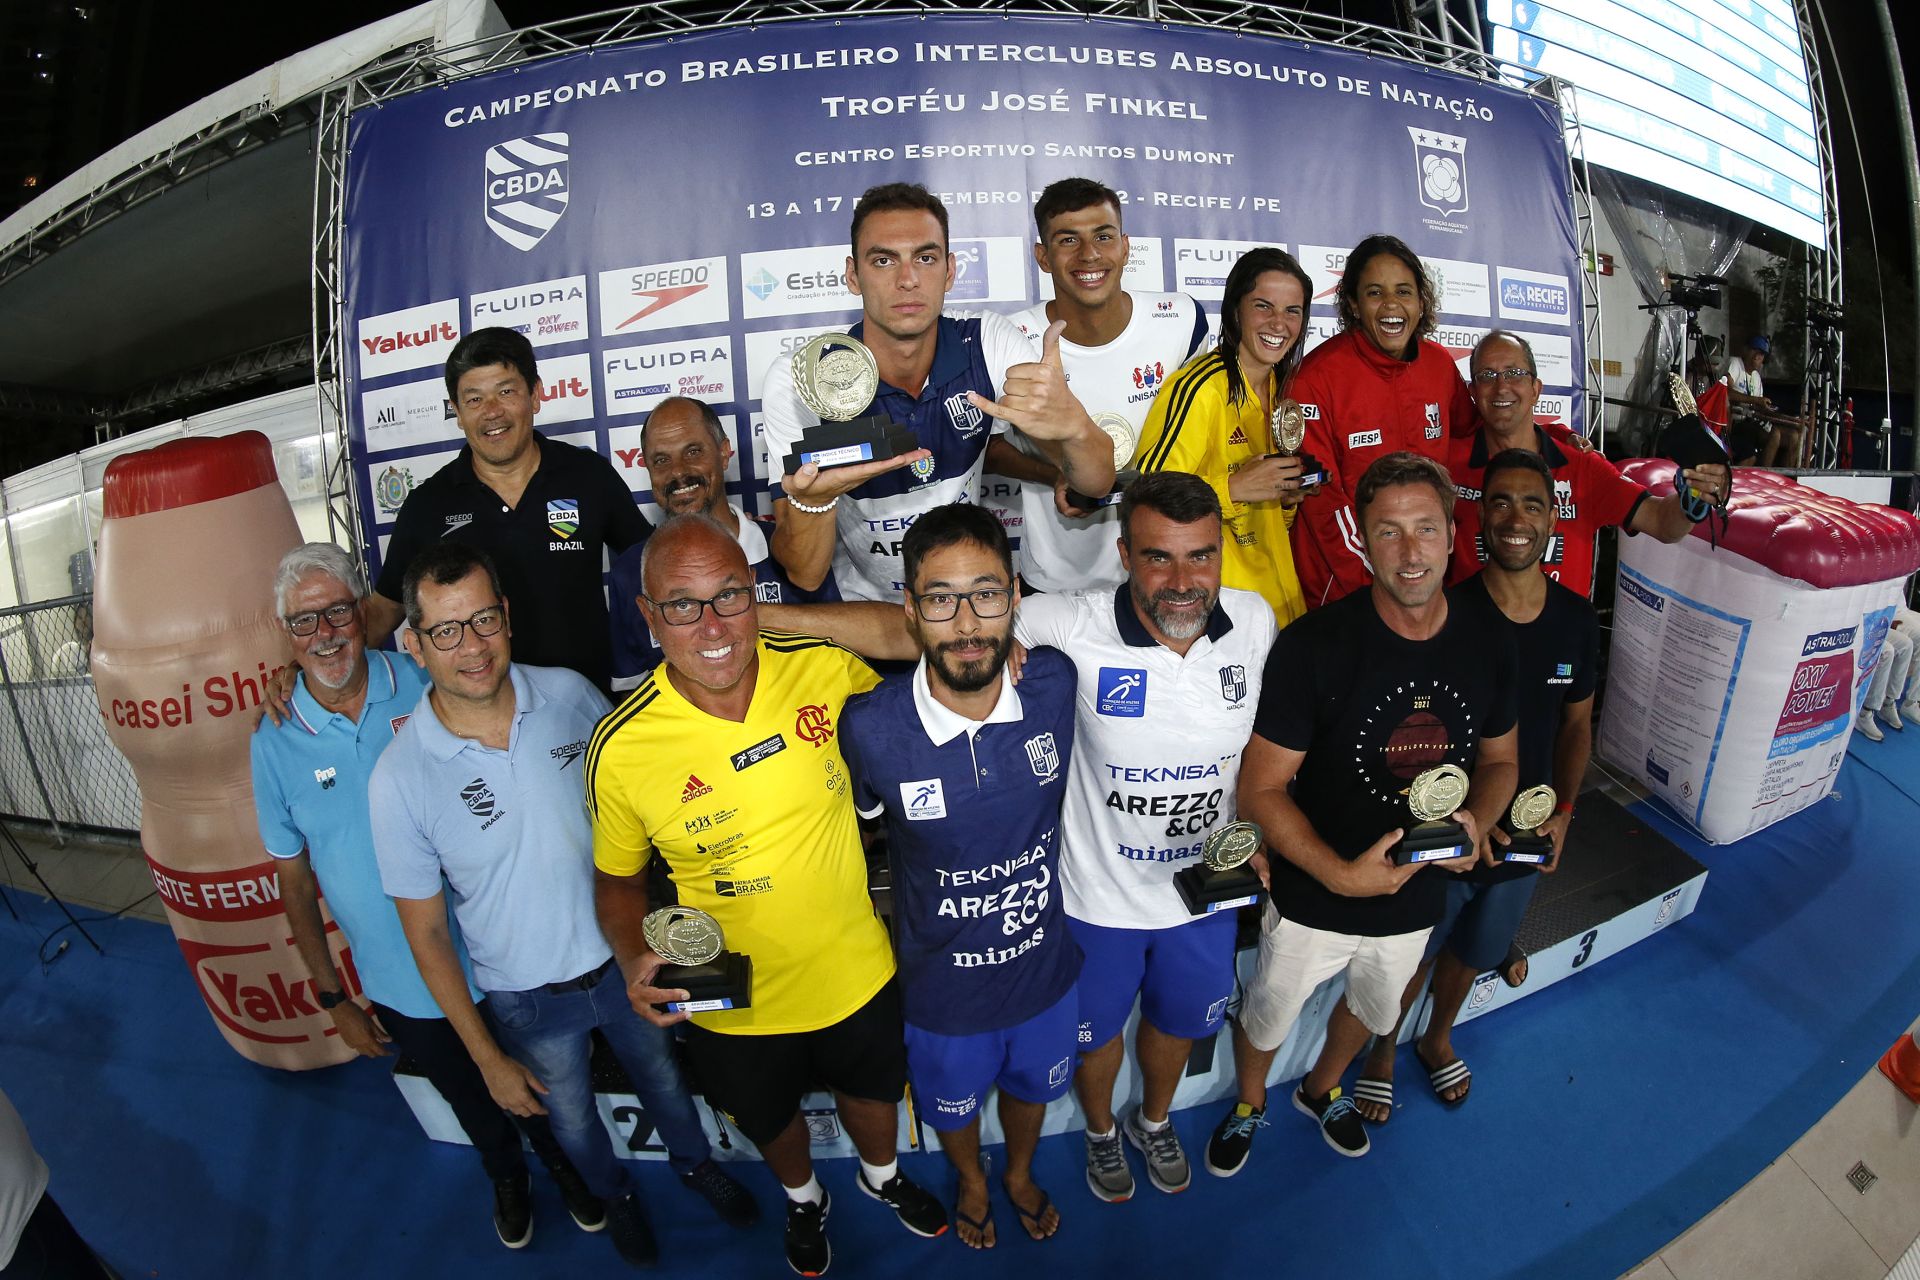 Campeonato Brasileiro Interclubes - CBI® Absoluto de Natação - Troféu José Finkel 